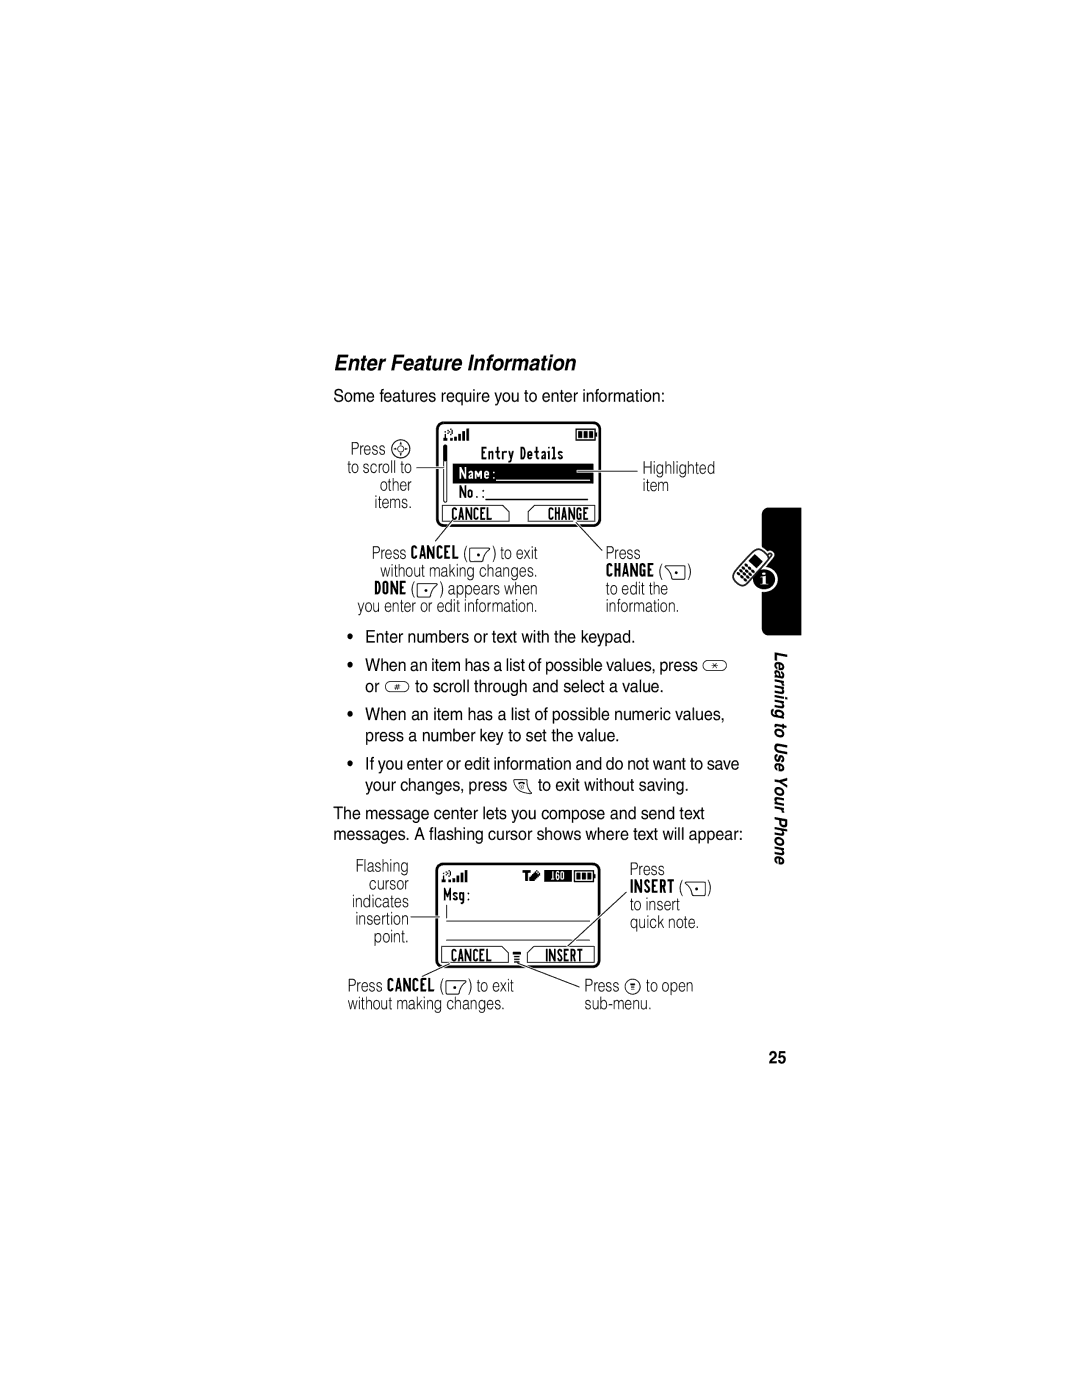 Motorola C353 manual Enter Feature Information 